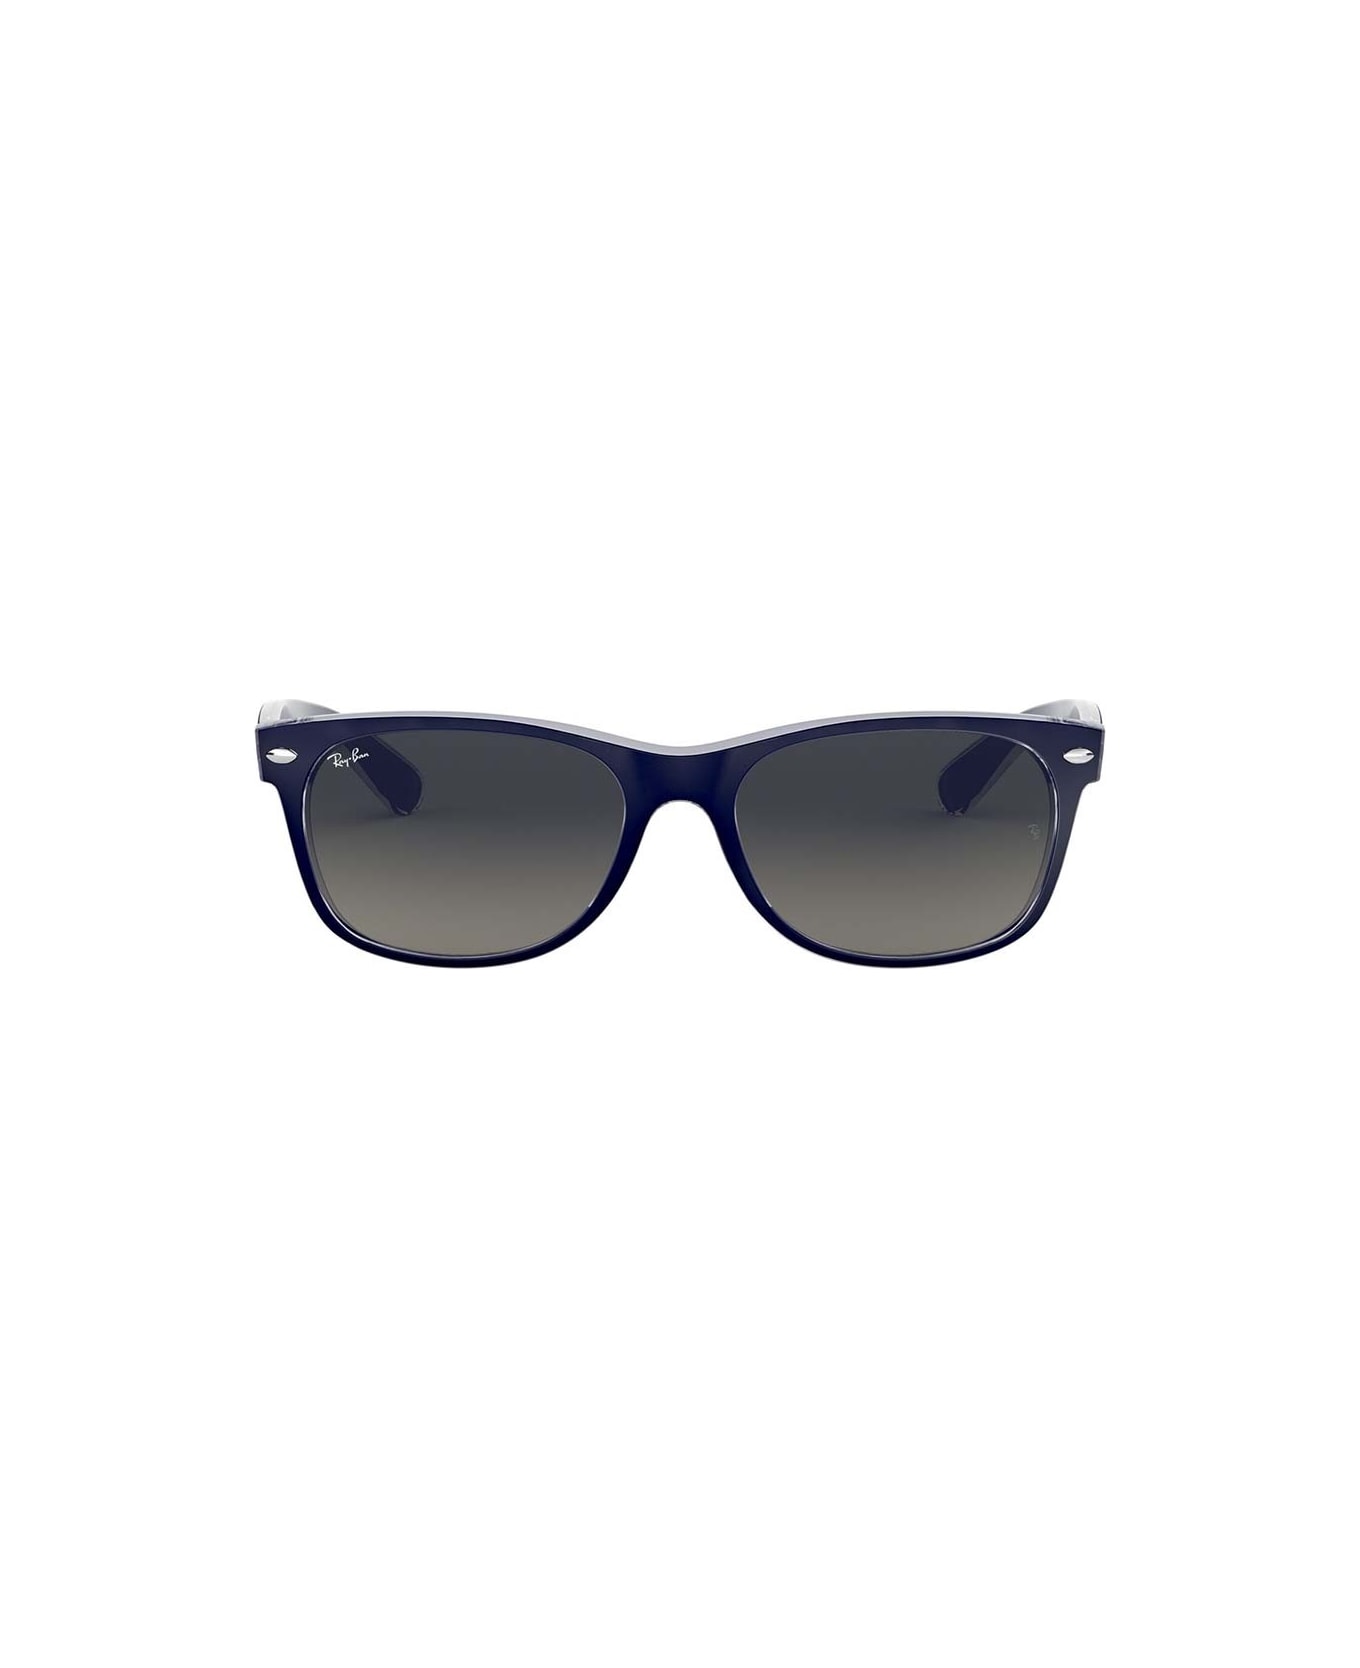 Ray-Ban Sunglasses - Blu/Grigio